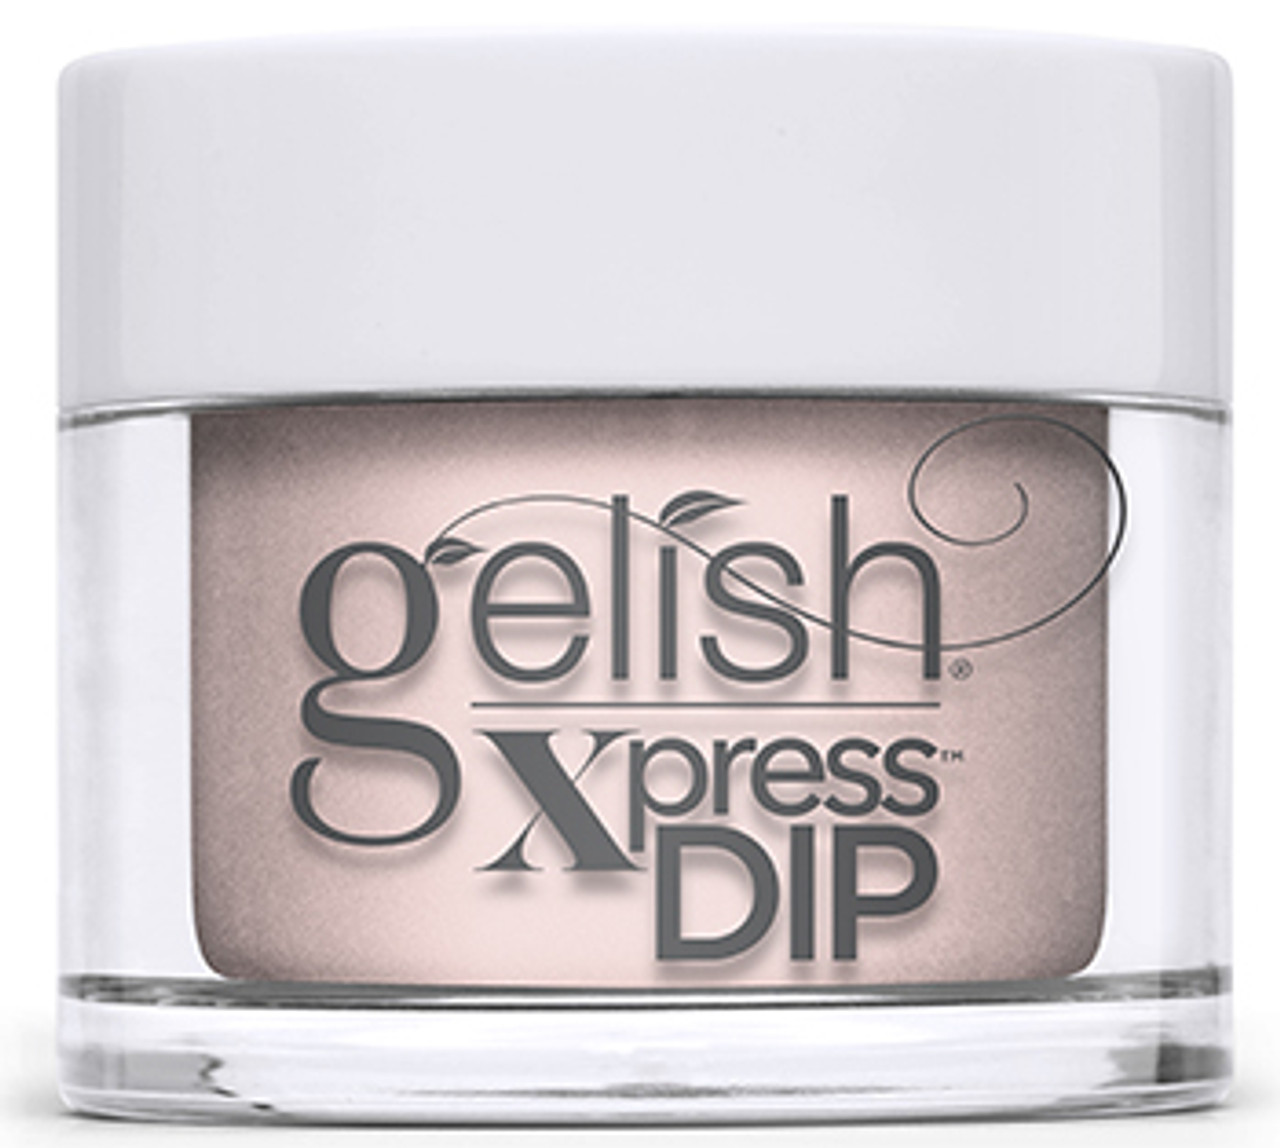 Gelish Xpress Dip All About The Pout - 1.5 oz / 43 g